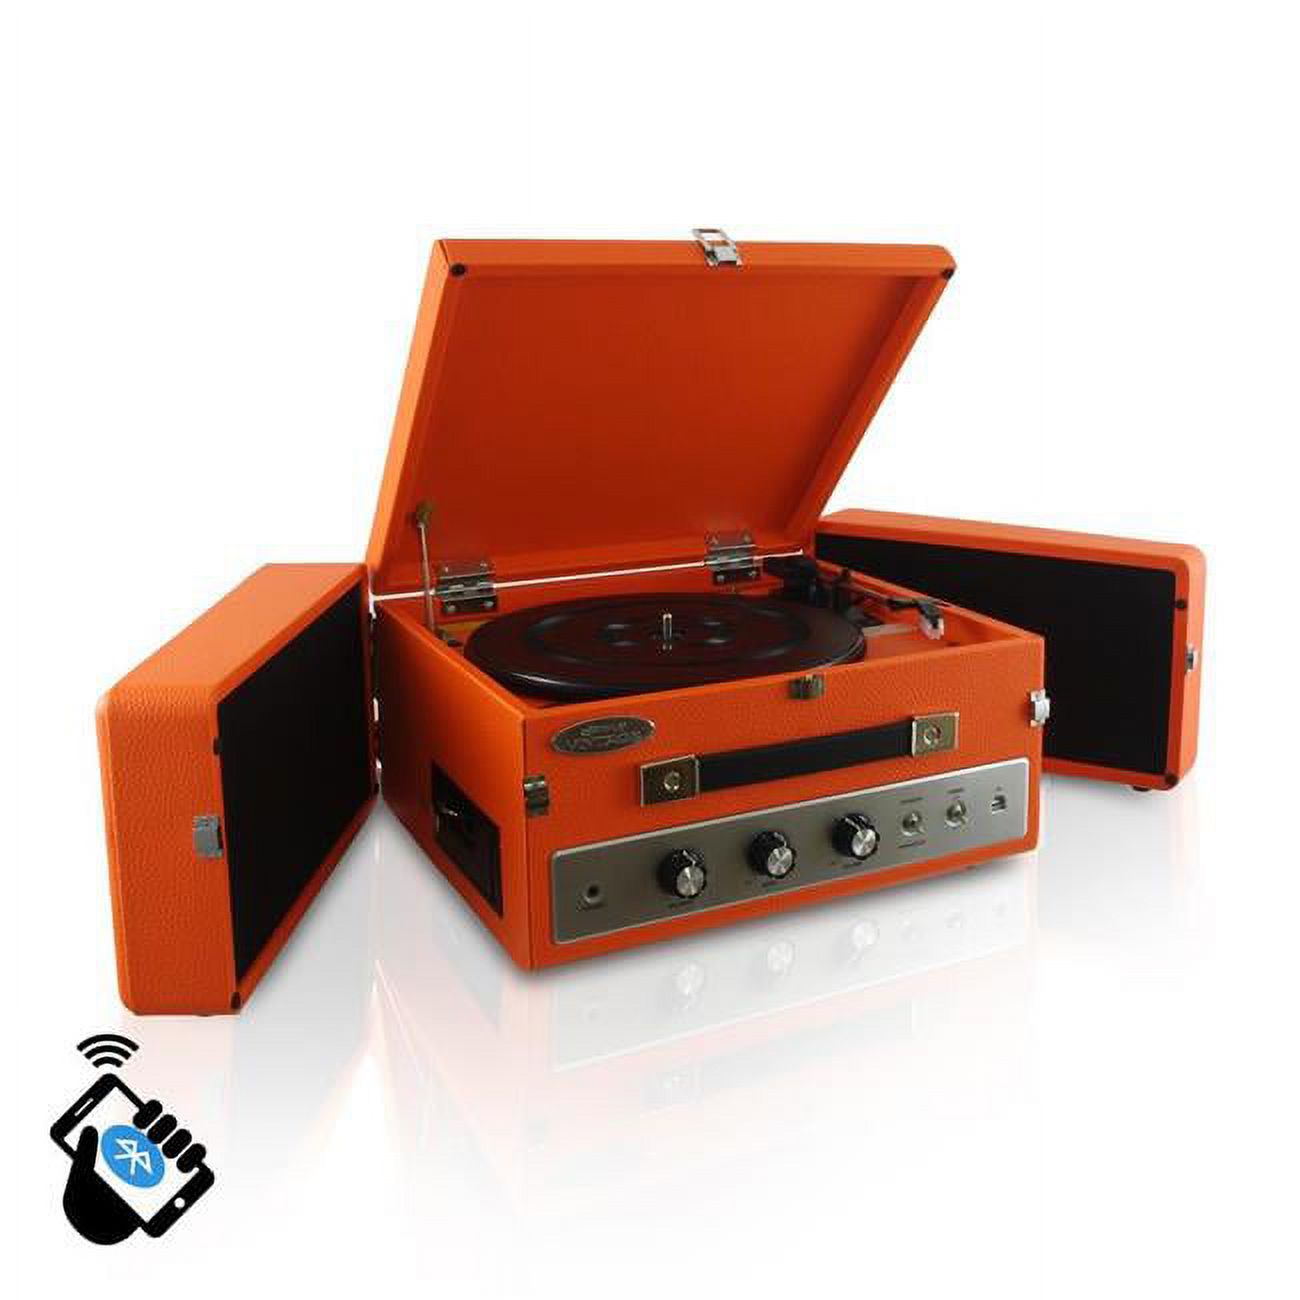 Pyle PLTT82BTOR Bluetooth Turntable Orange Record Player + Vinyl-MP3 Recording - image 1 of 5